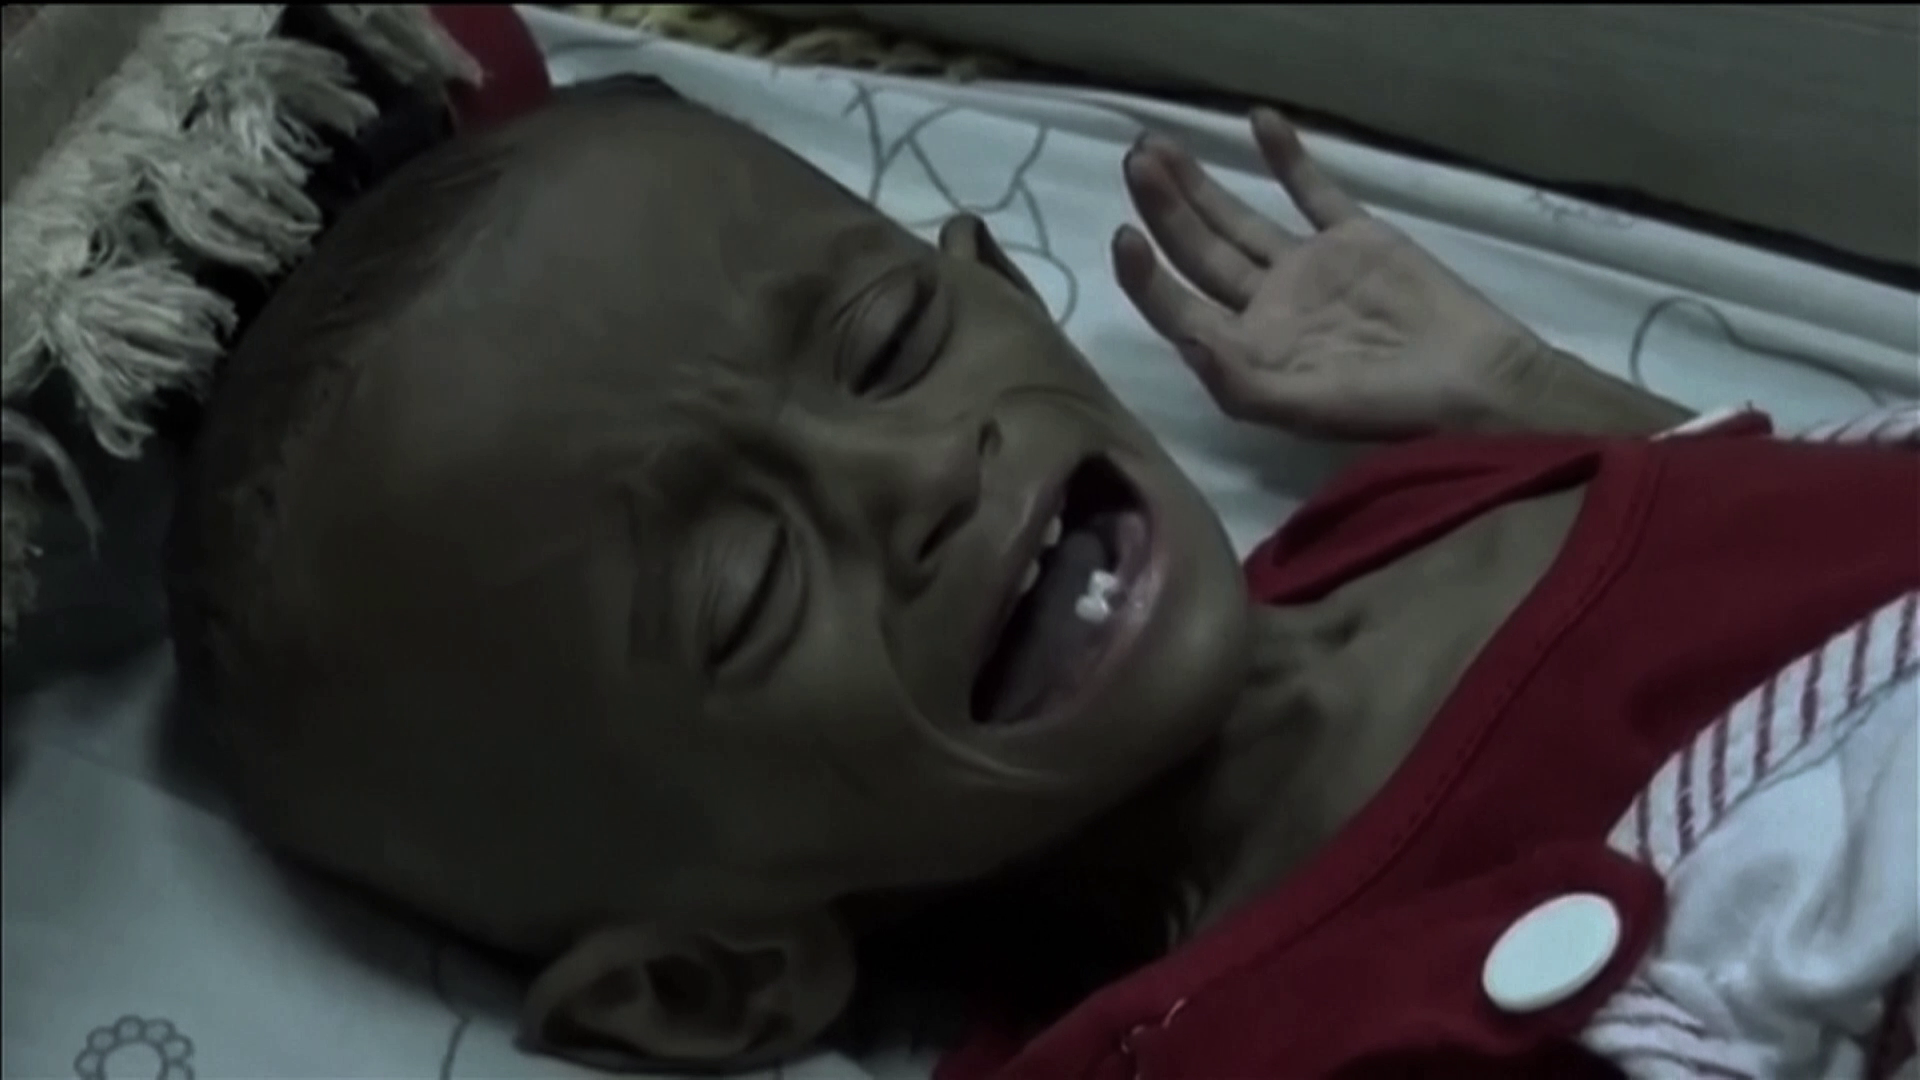 Yemeni mothers, babies facing ‘unimaginable horror,’ Red Cross warns